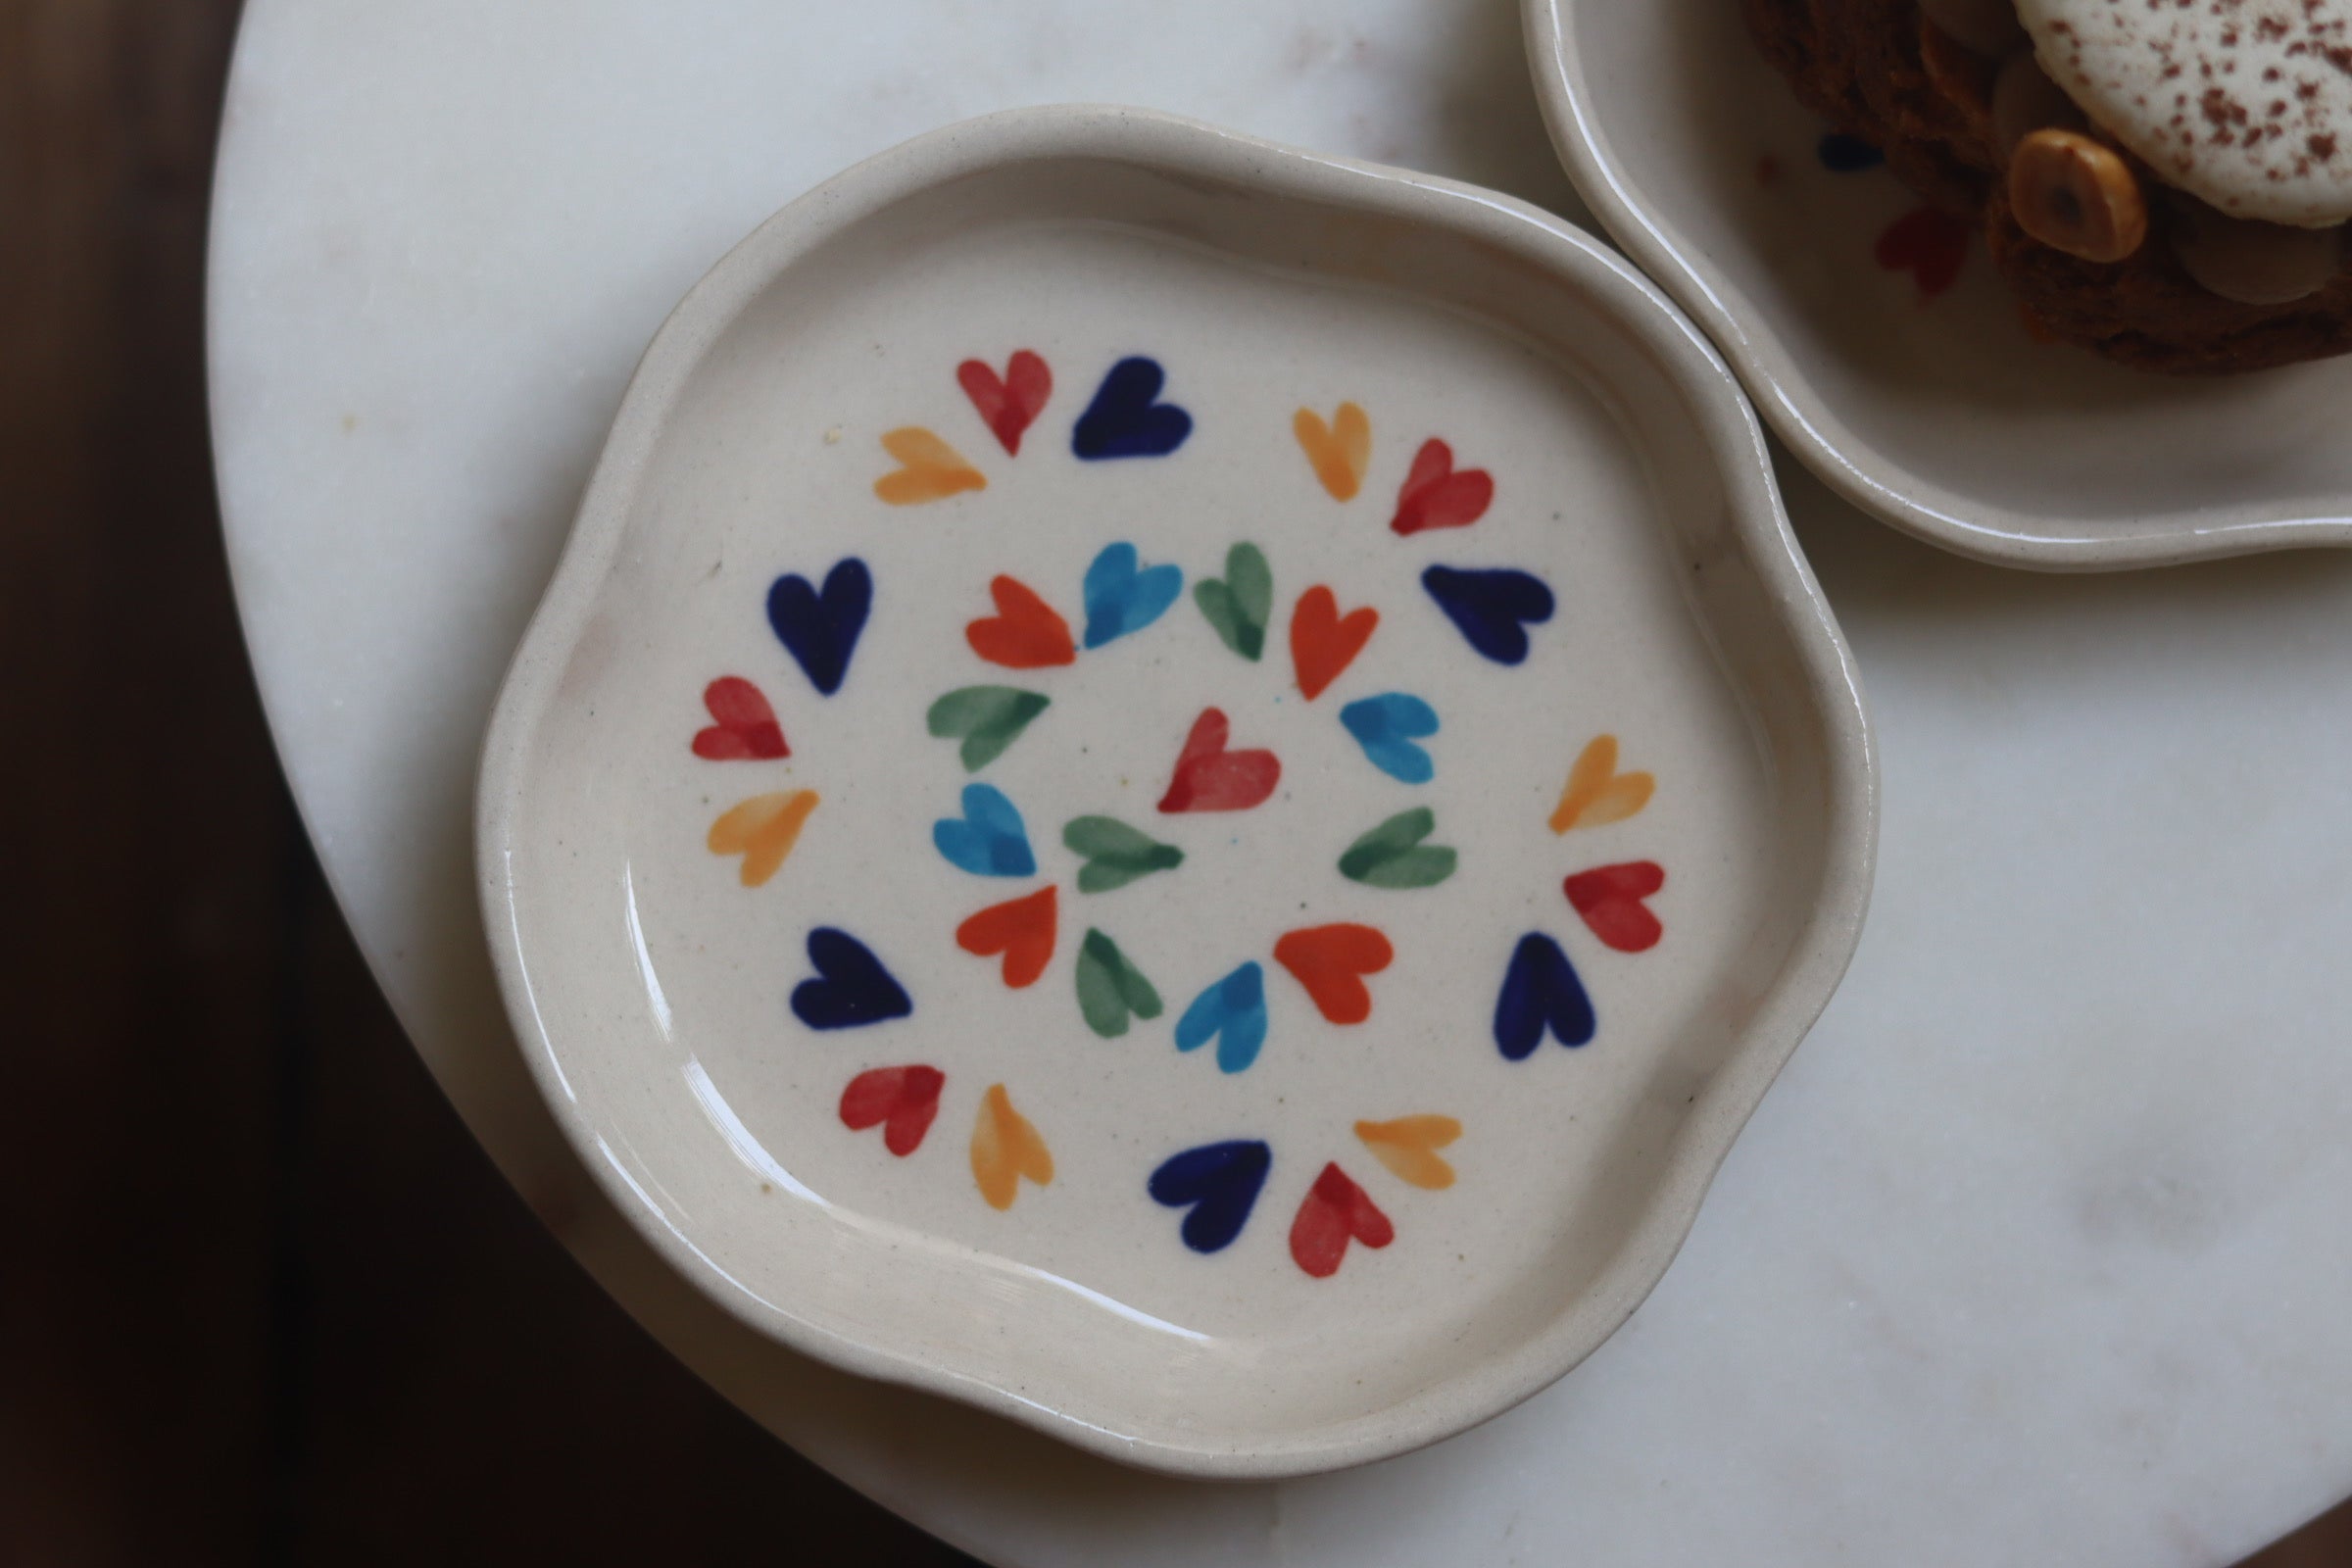 Handmade ceramic colorful heart dessert plate 